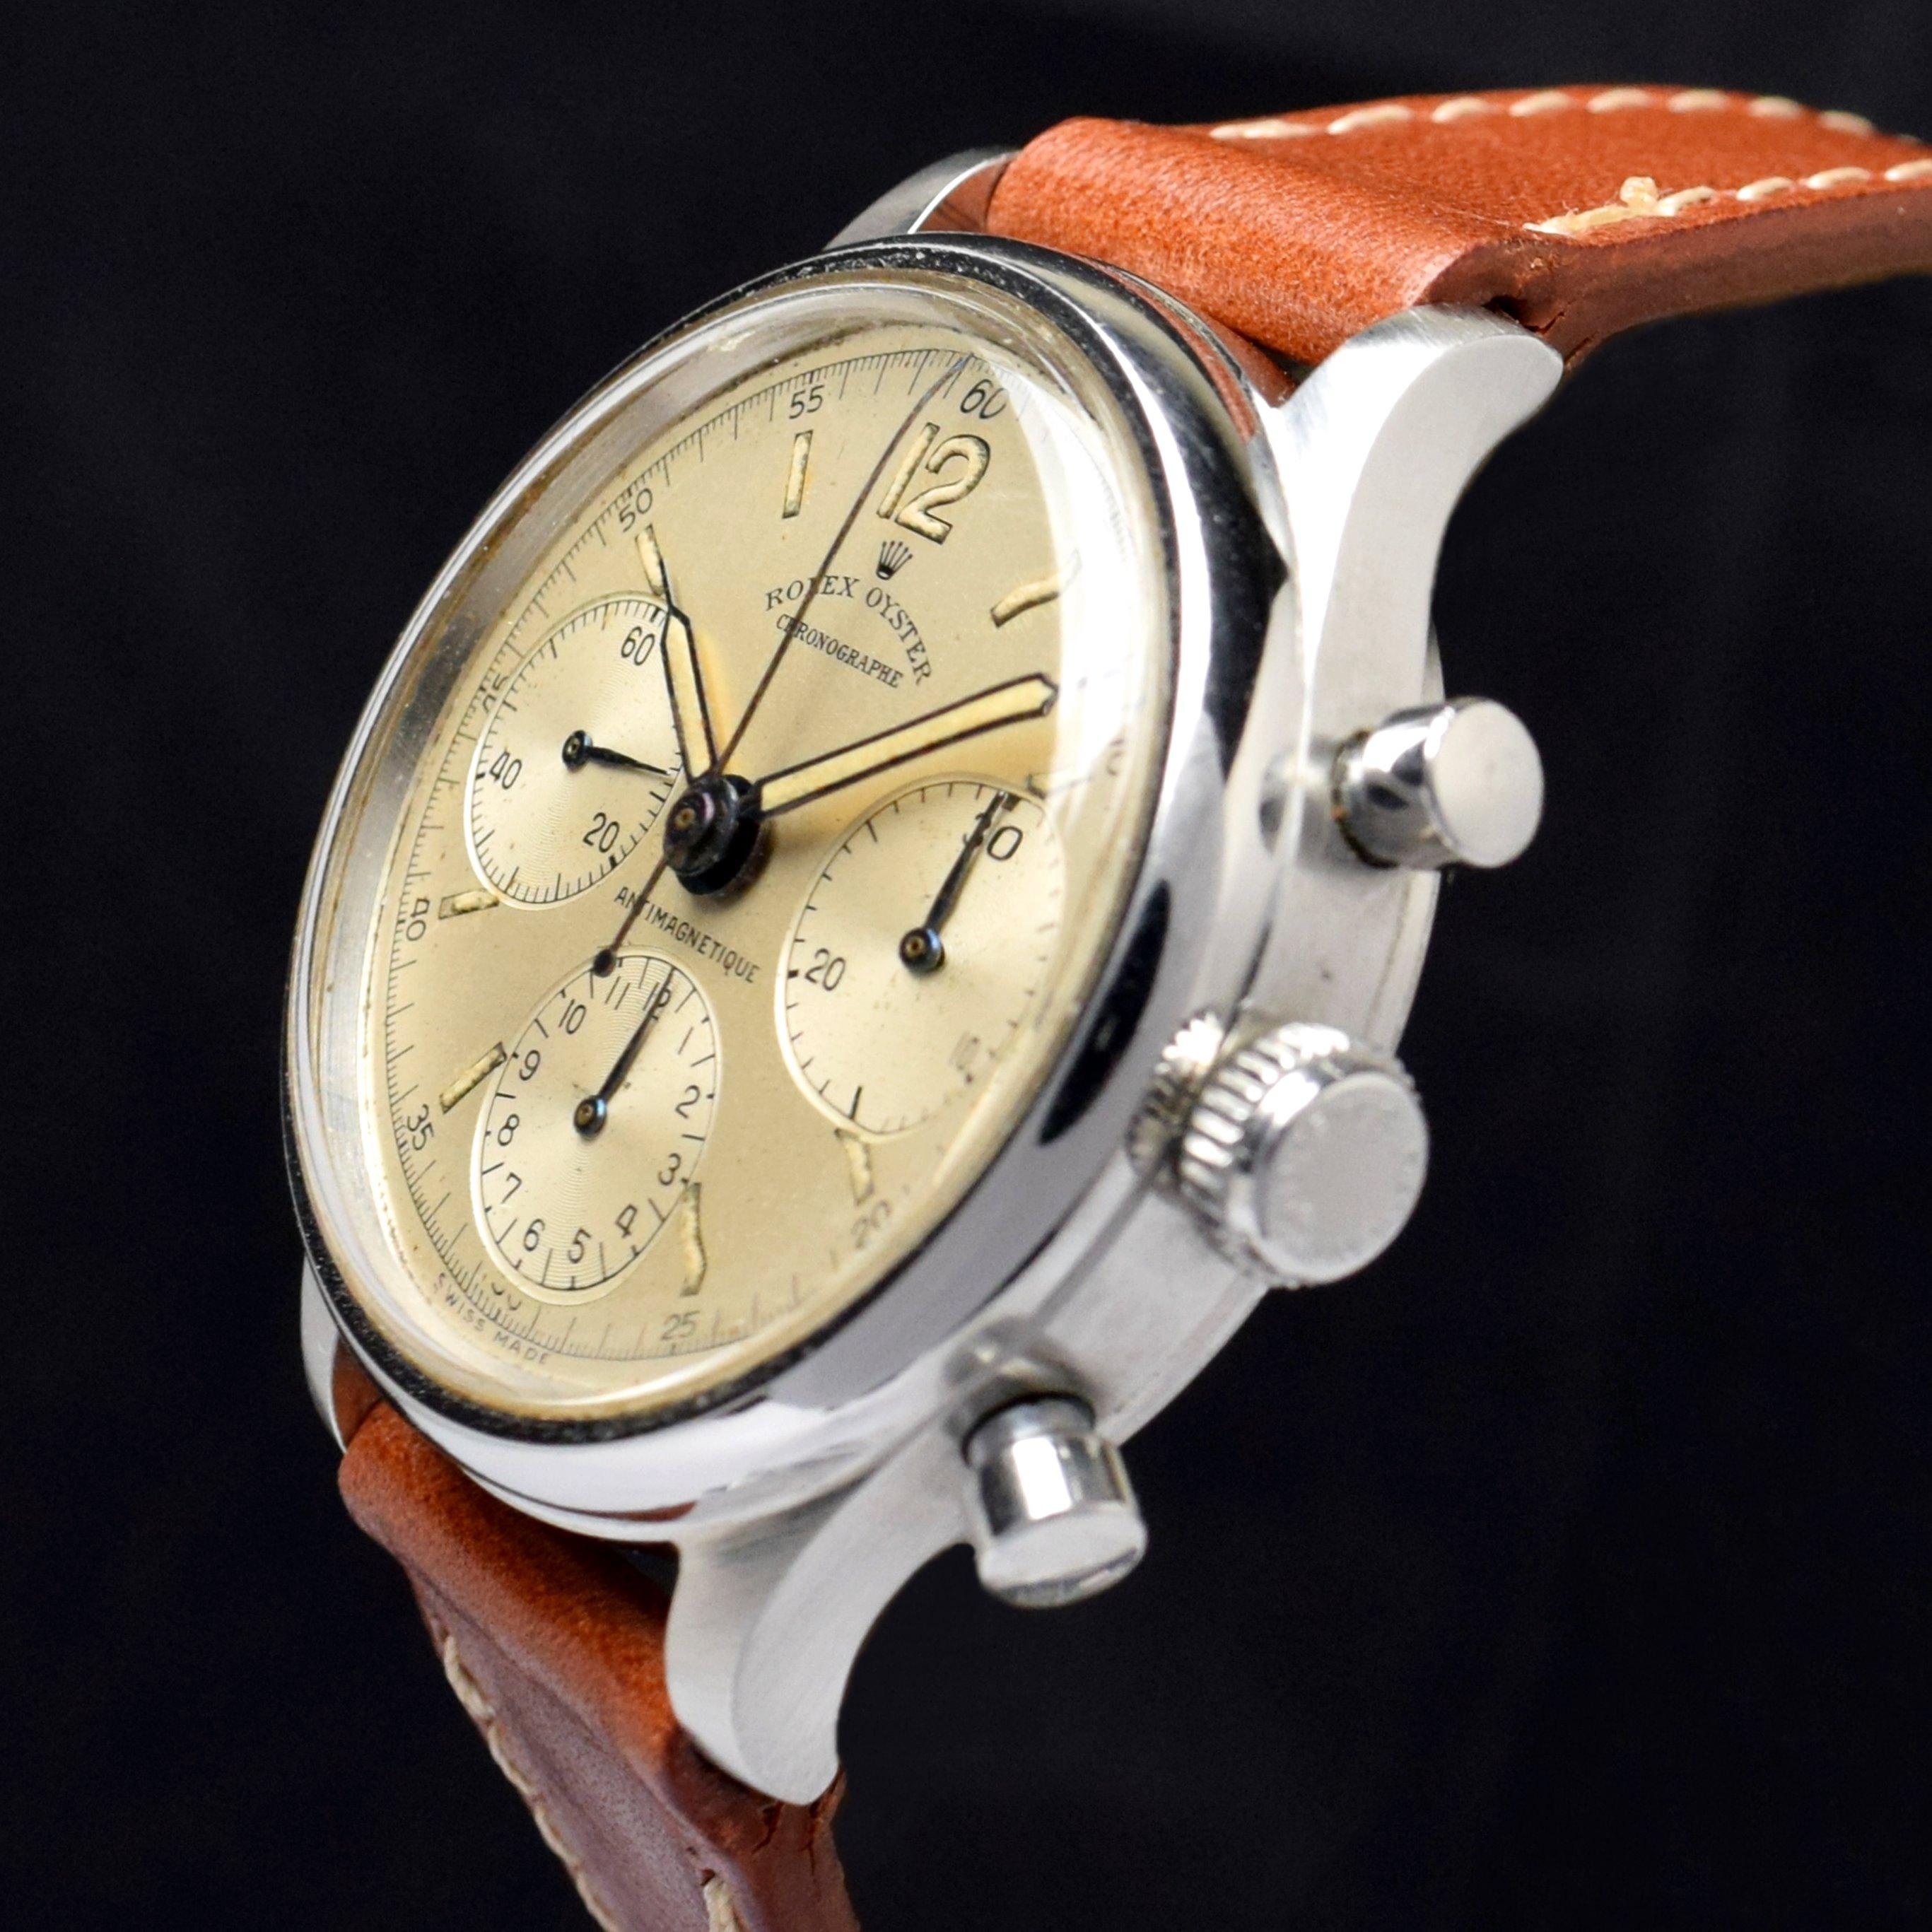 rolex chronographe antimagnetic automatic watch